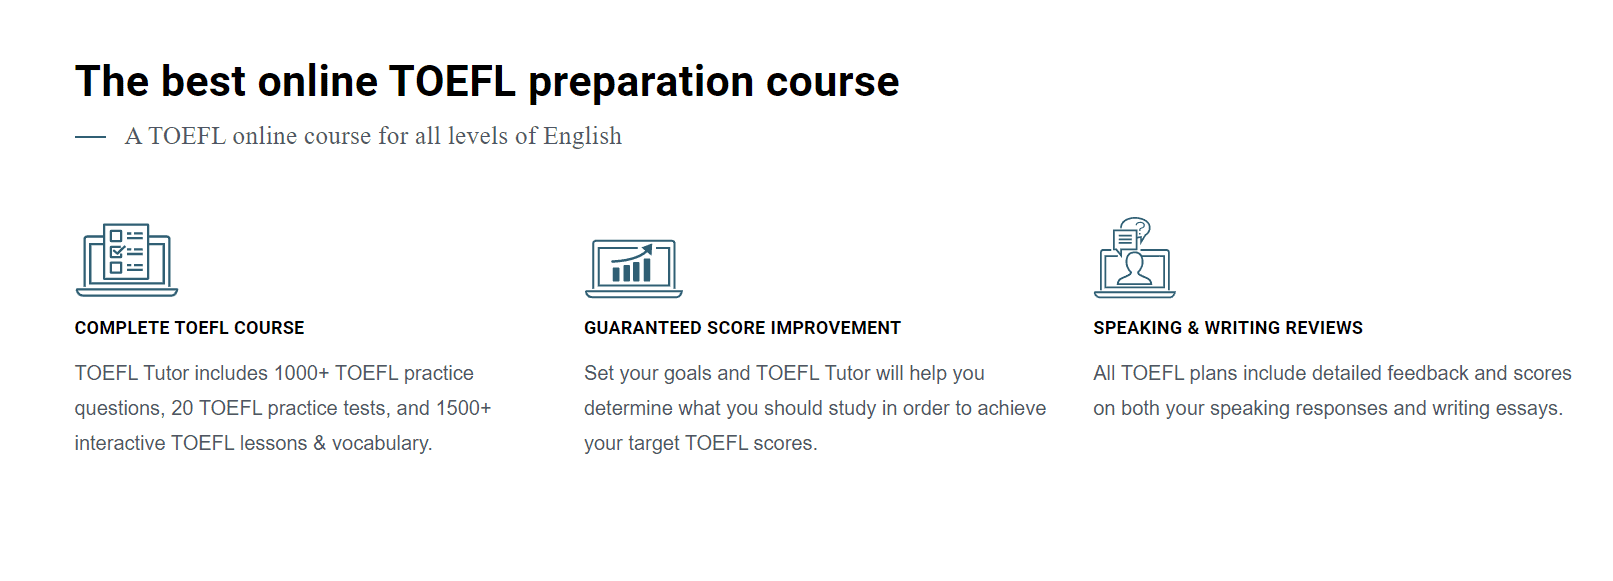 The best online TOEFL preparation course